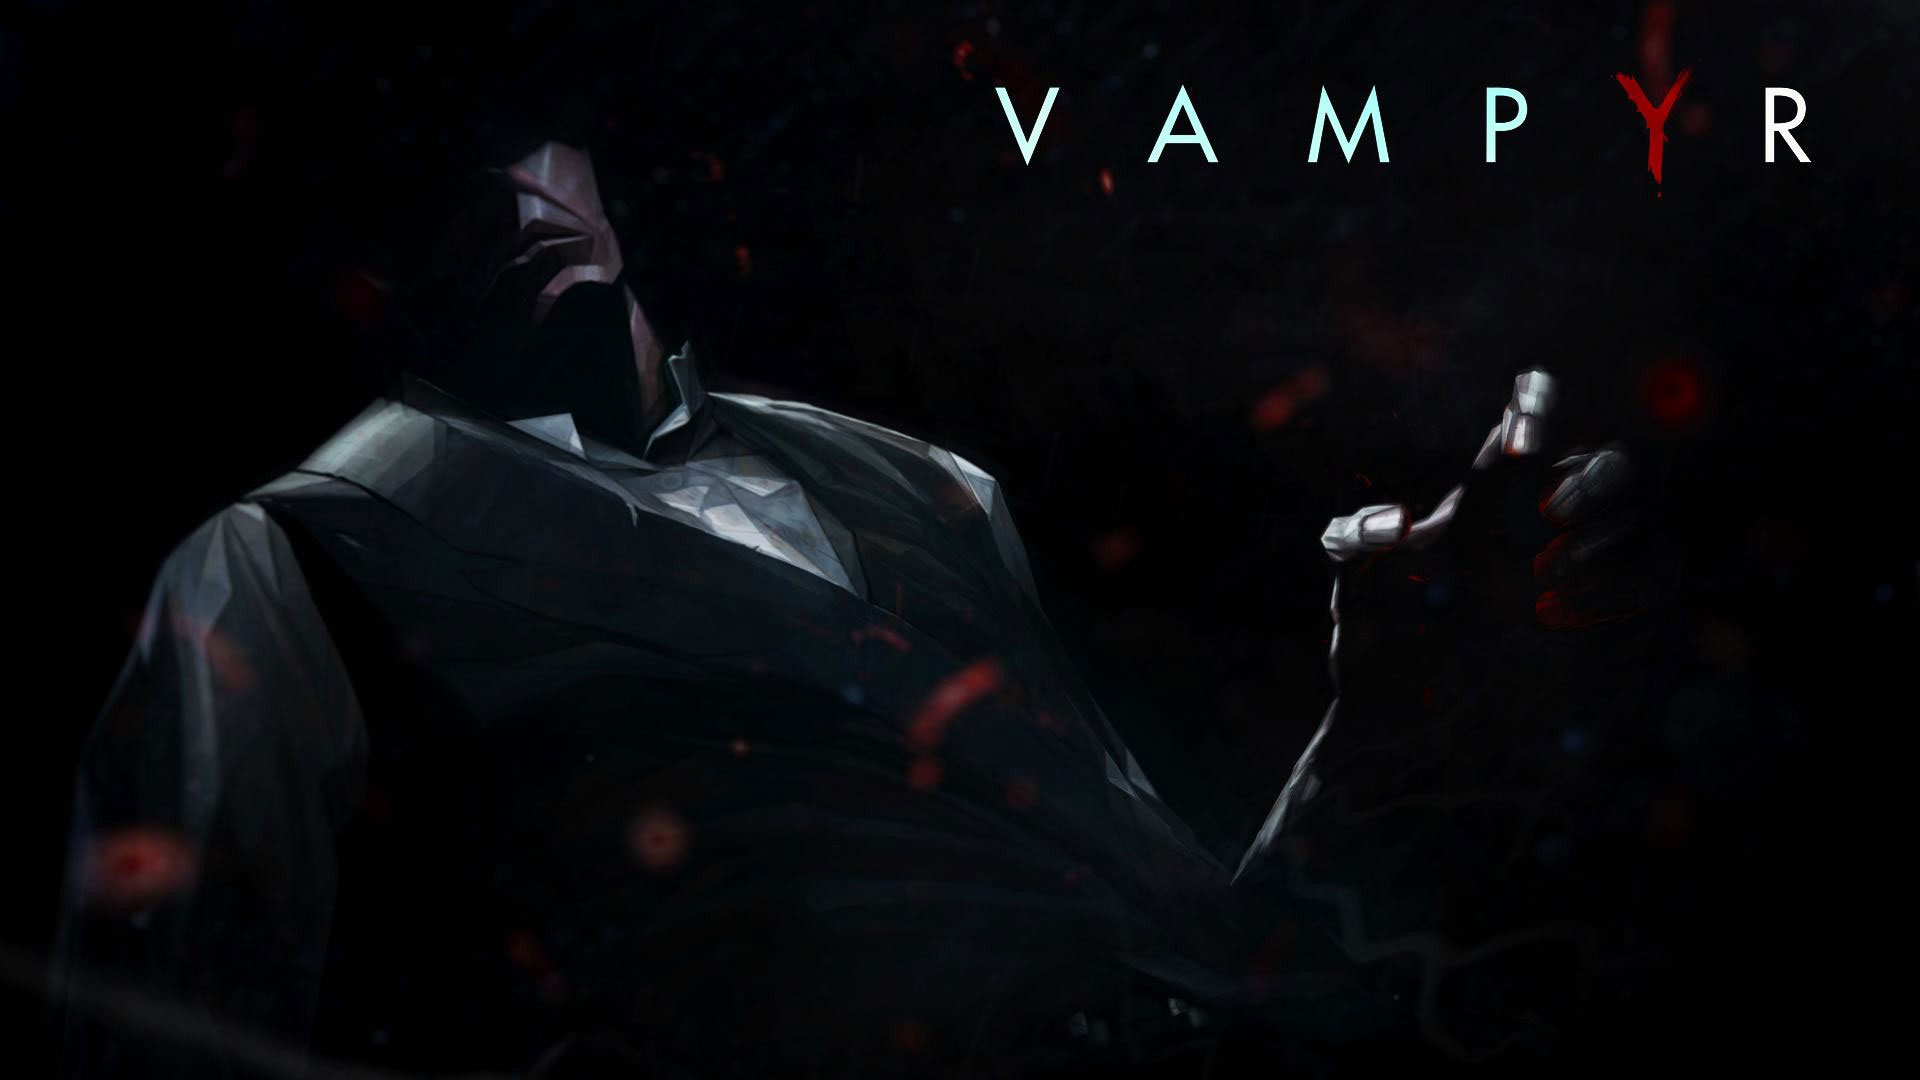 Vampyr Wallpapers in Ultra HD | 4K - Gameranx1920 x 1080